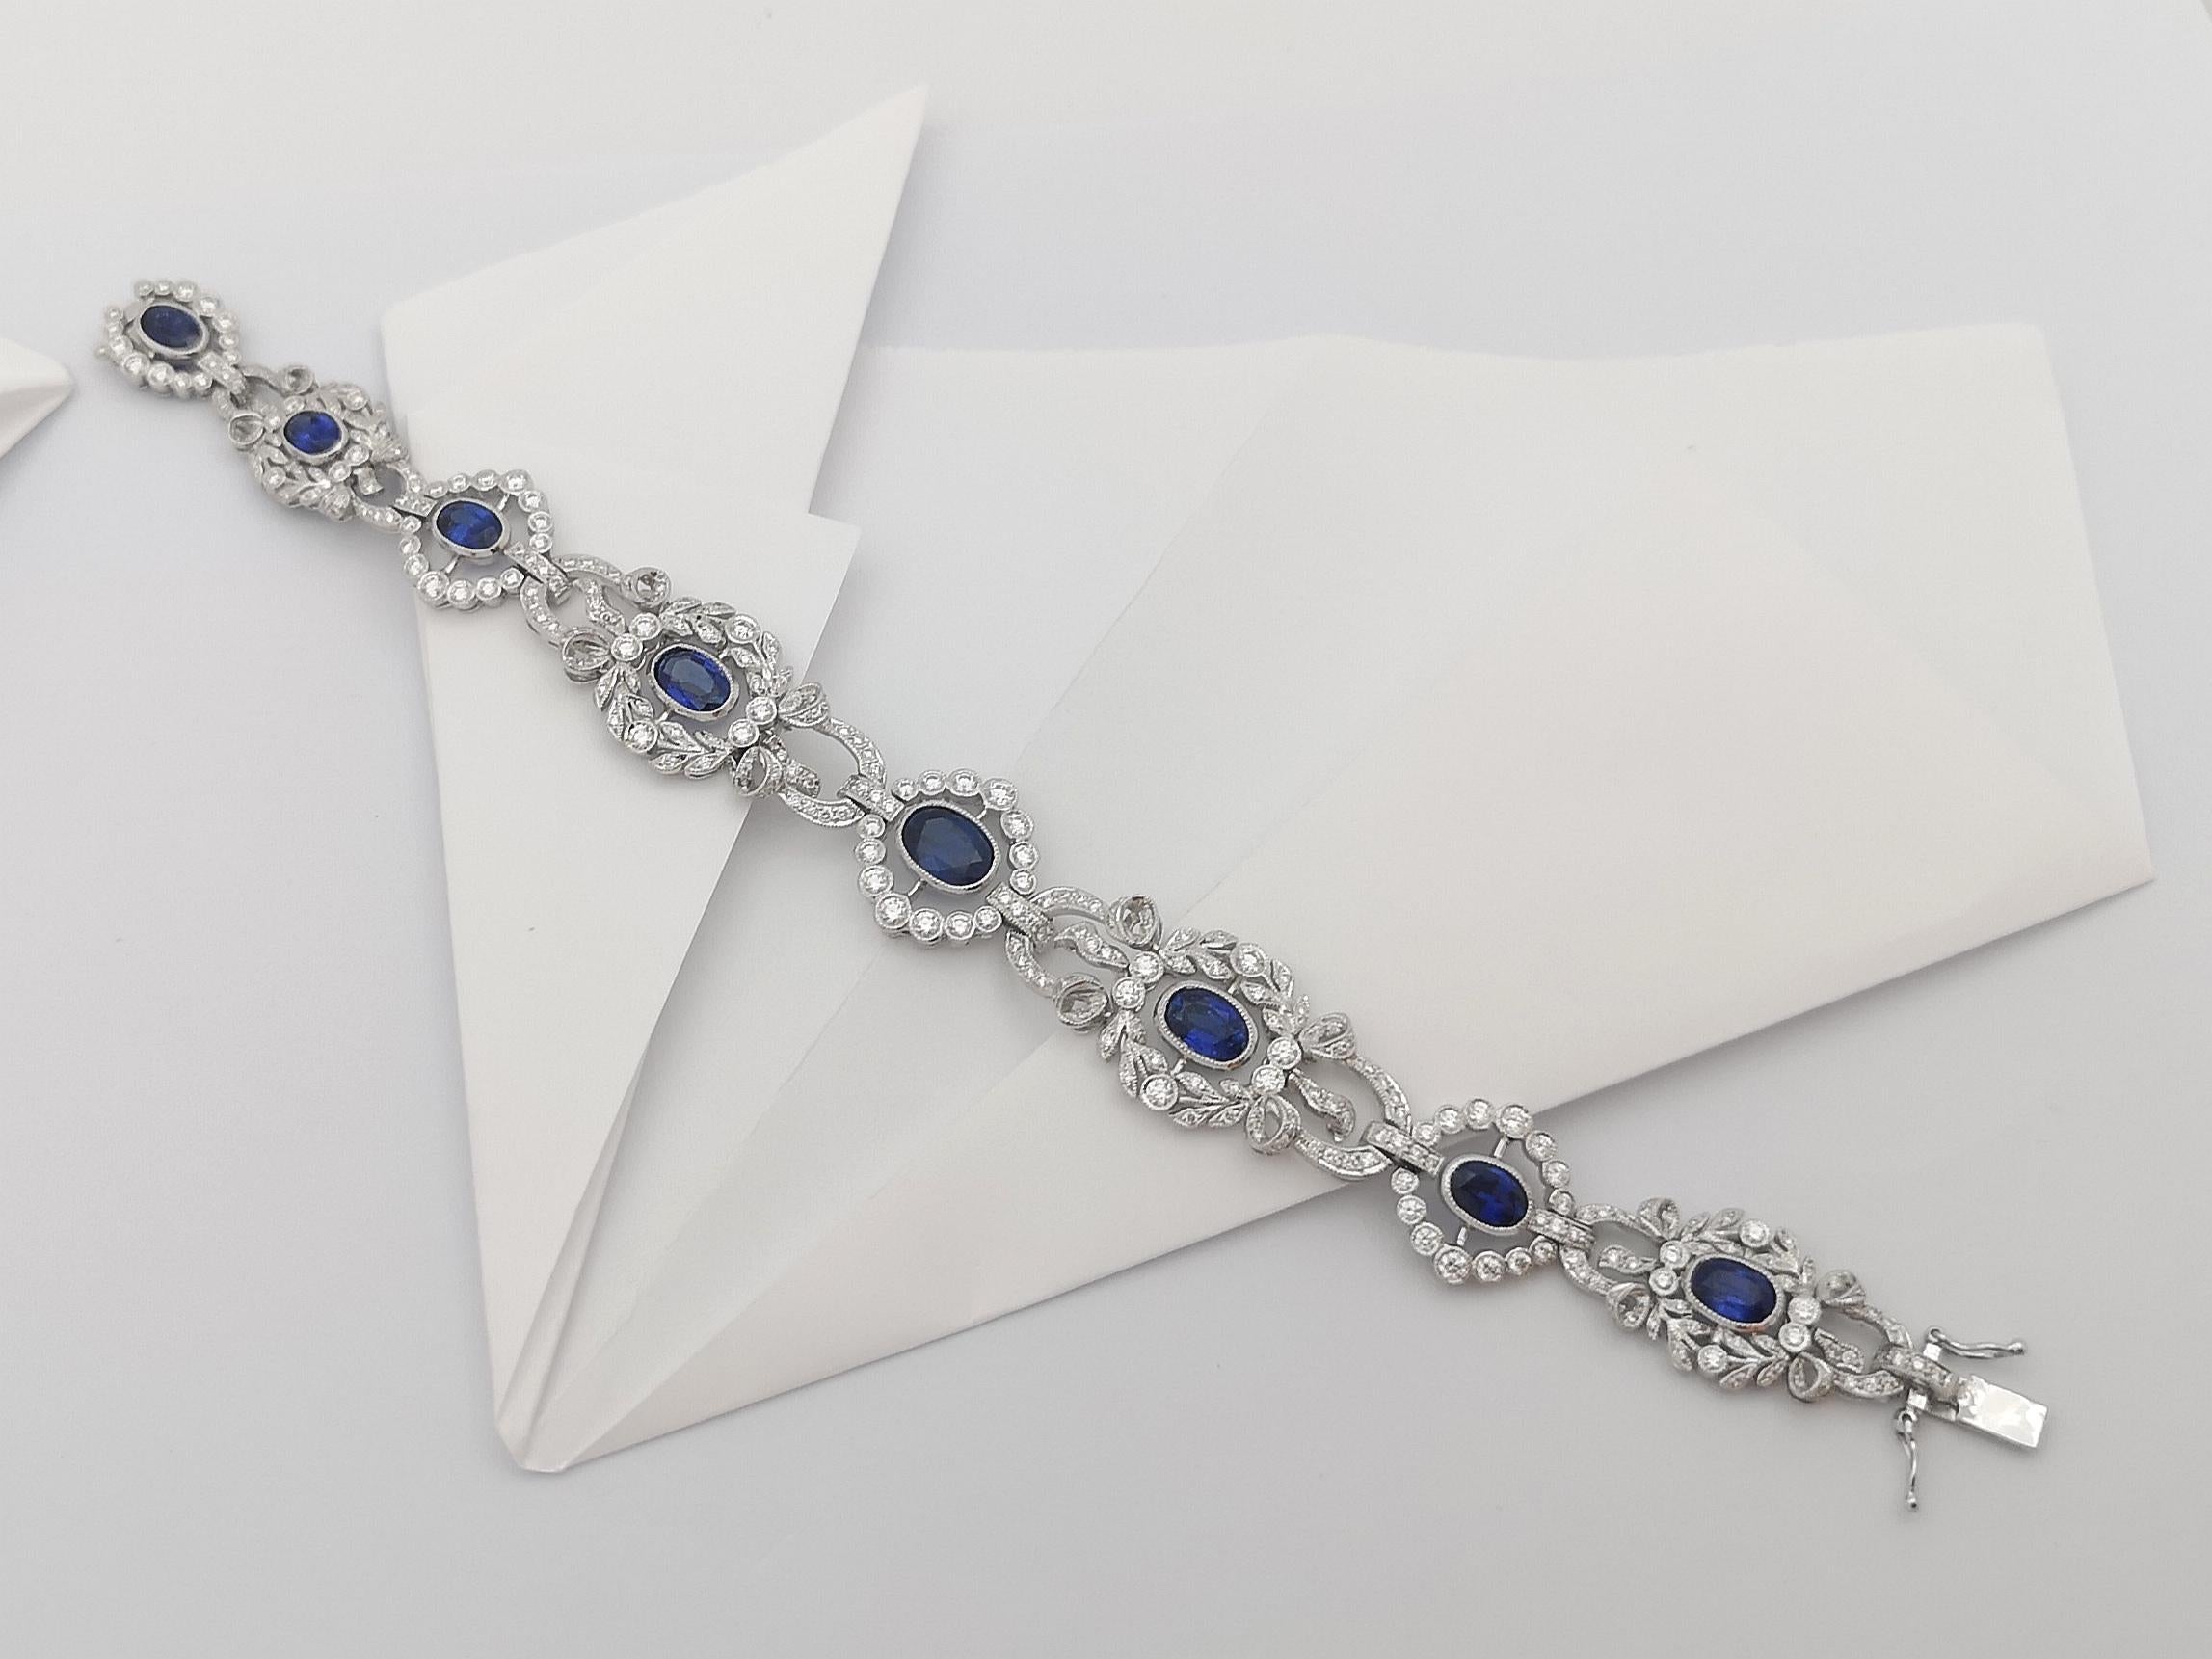  Blue Sapphire with Diamond Bracelet set in 18 Karat White Gold Settings For Sale 6